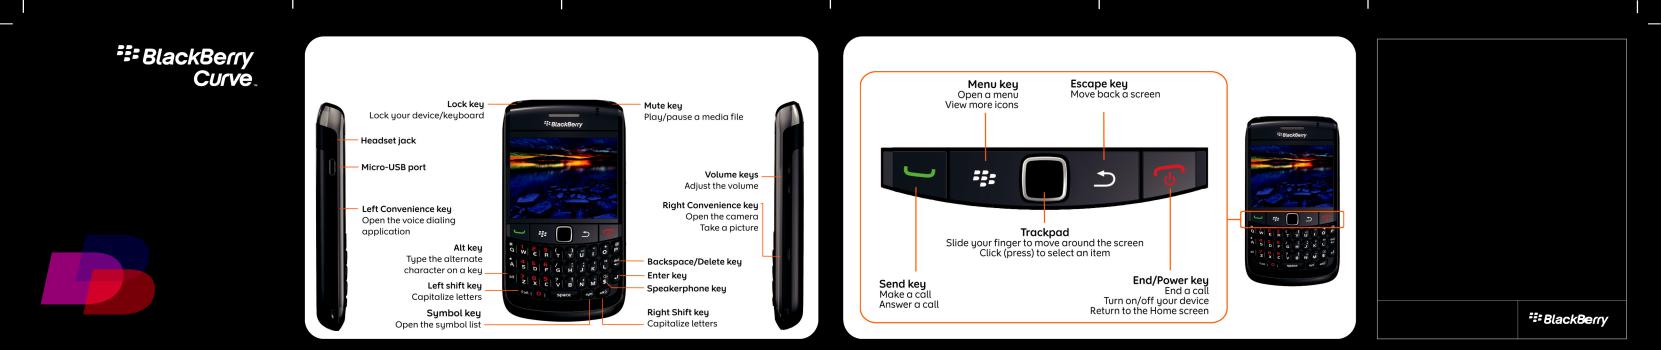 Blackberry Curve 8980 Start Here Guide